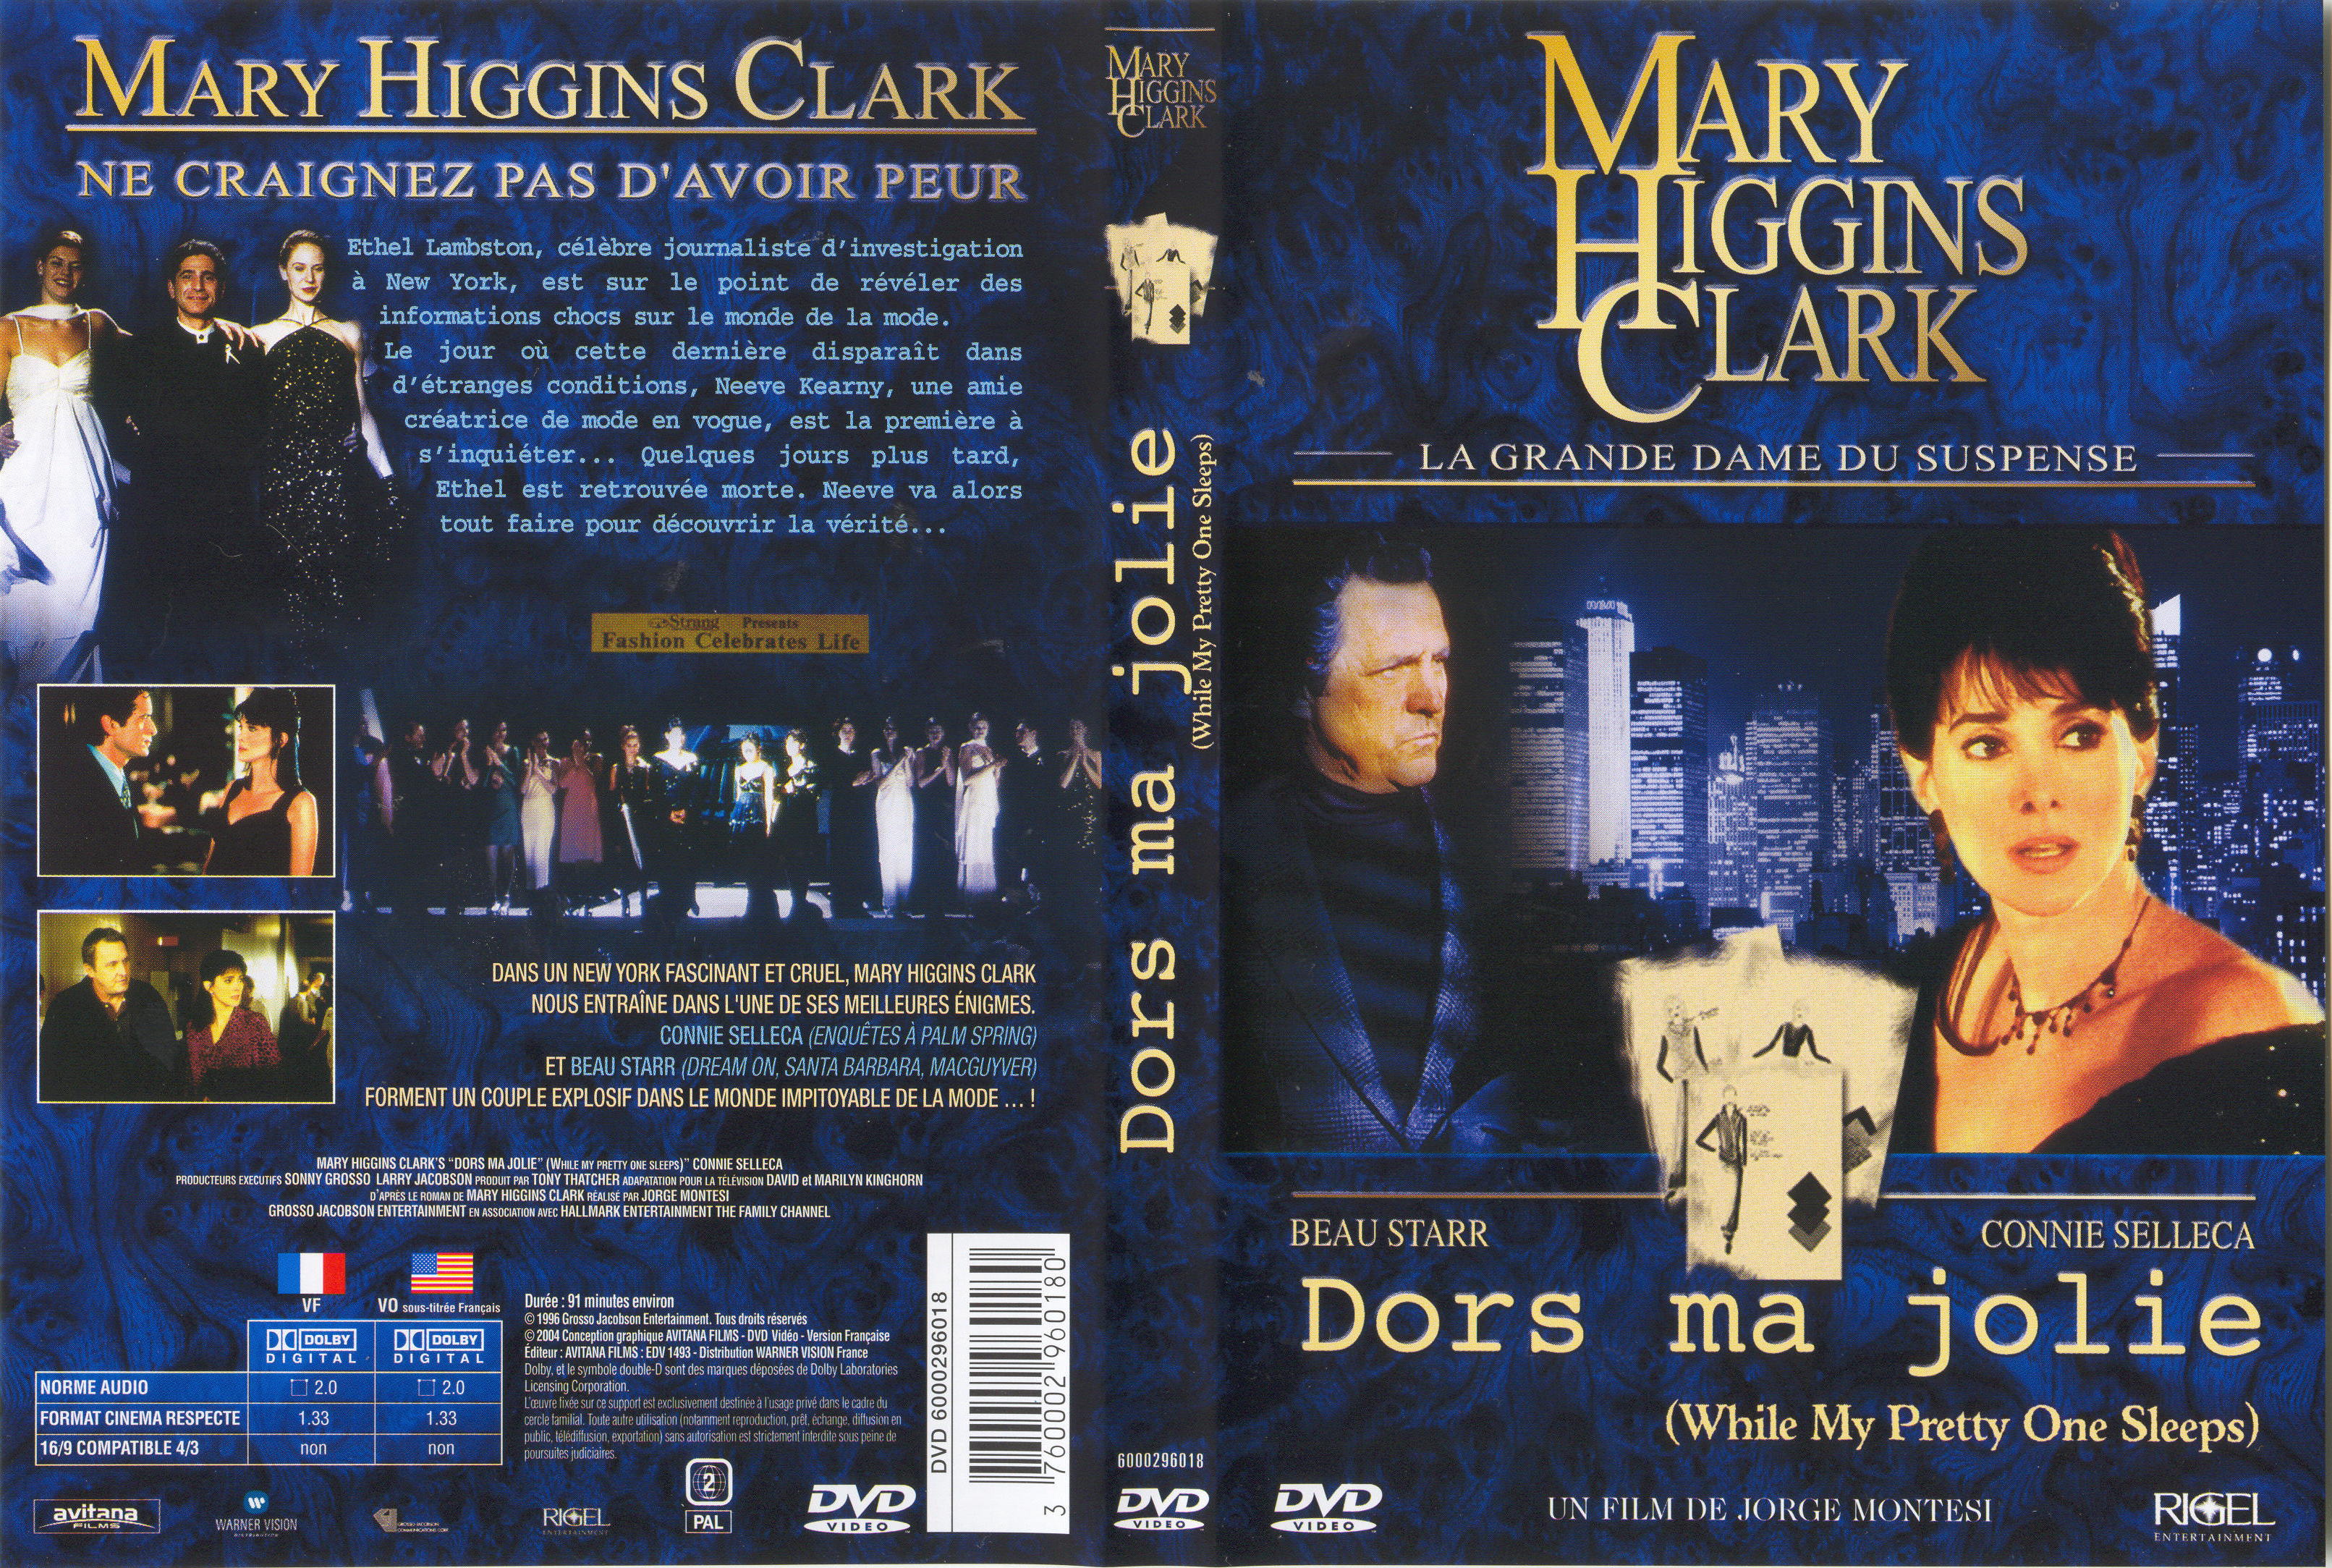 Jaquette DVD Mary Higgins Clark - Dors ma jolie